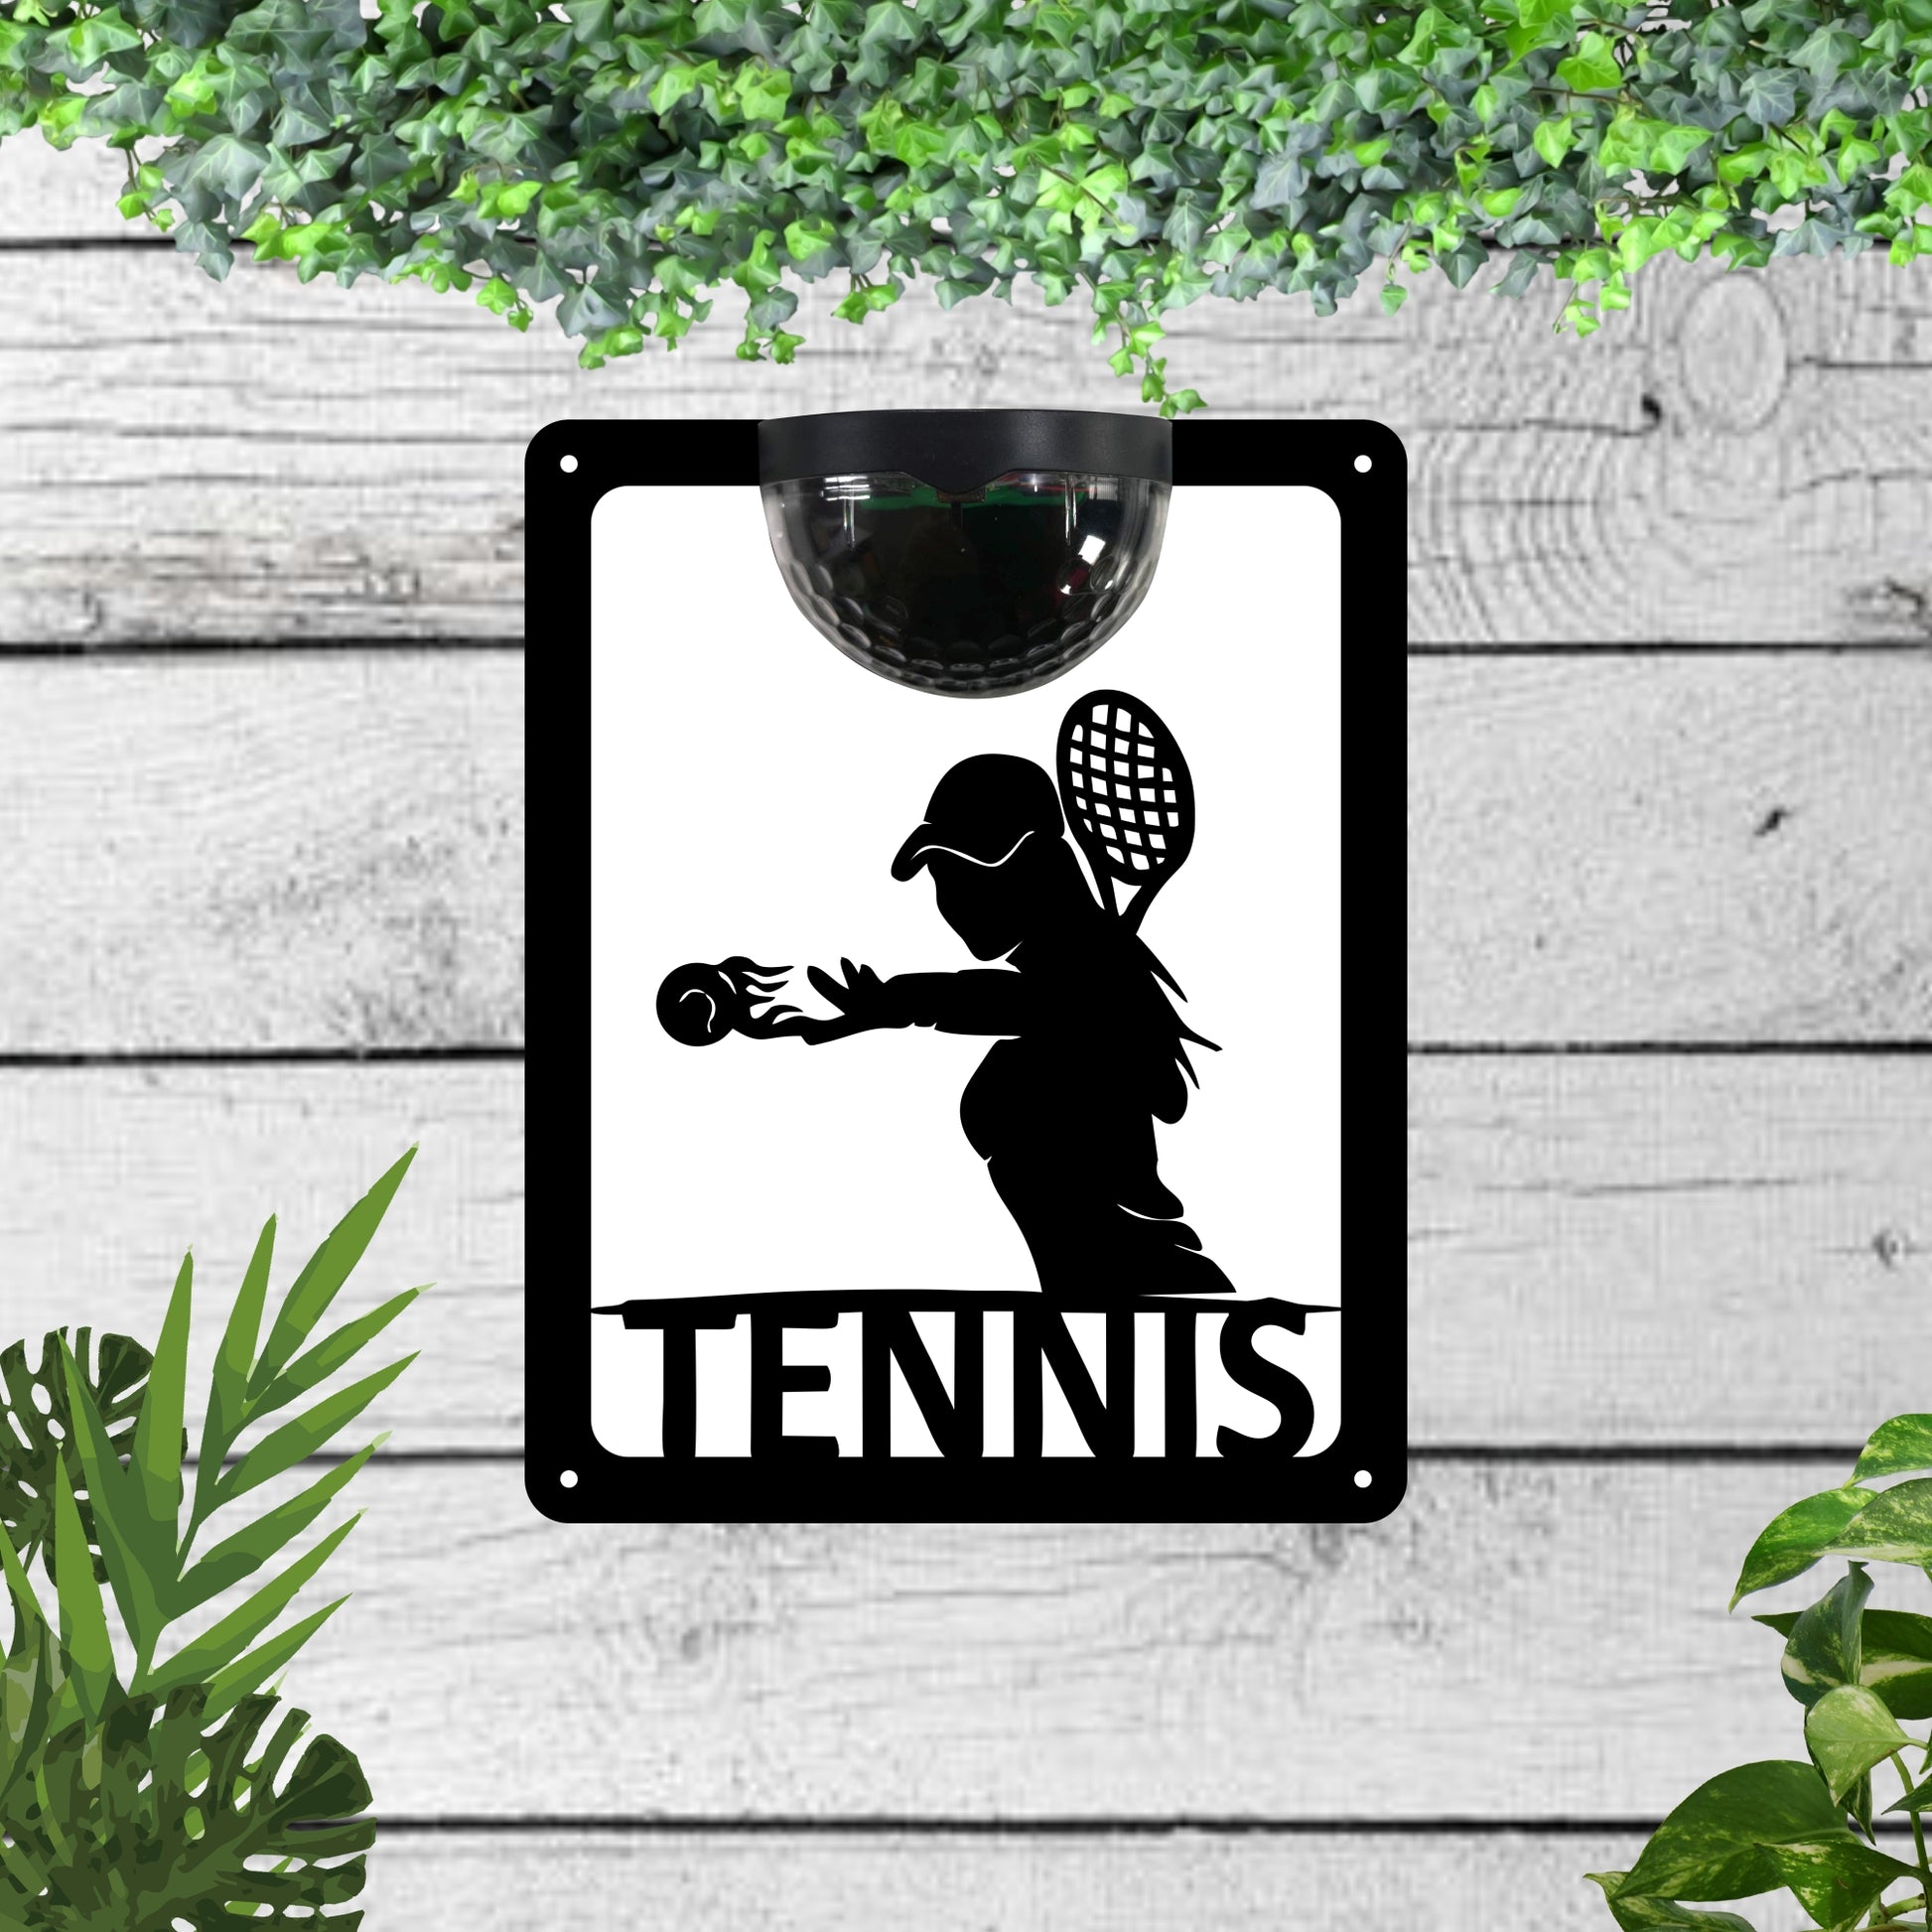 Garden solar wall plaque featuring a tennis player | John Alans